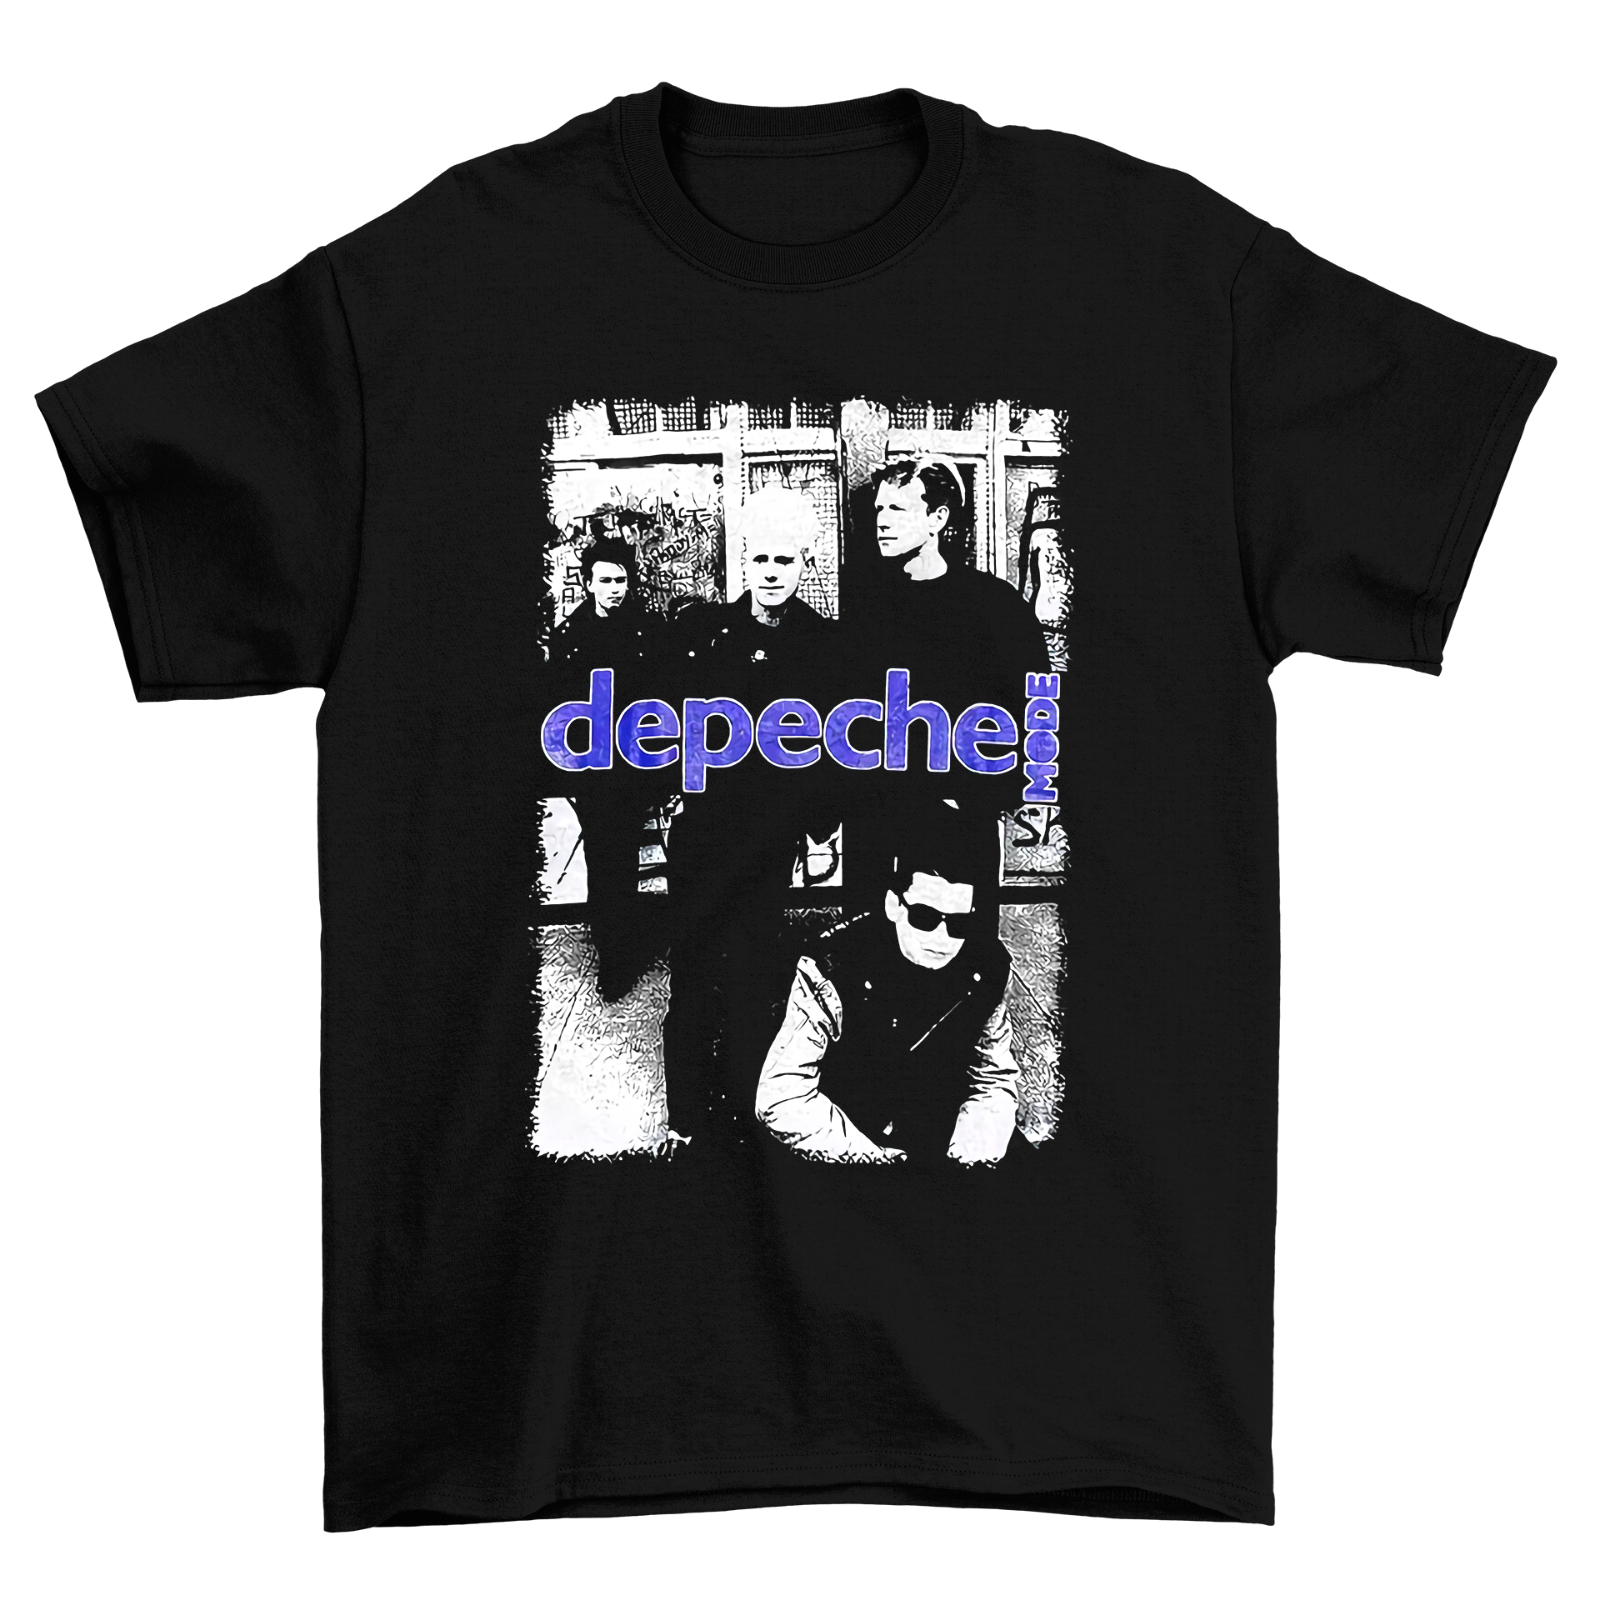 Depeche Mode - Members T-shirt